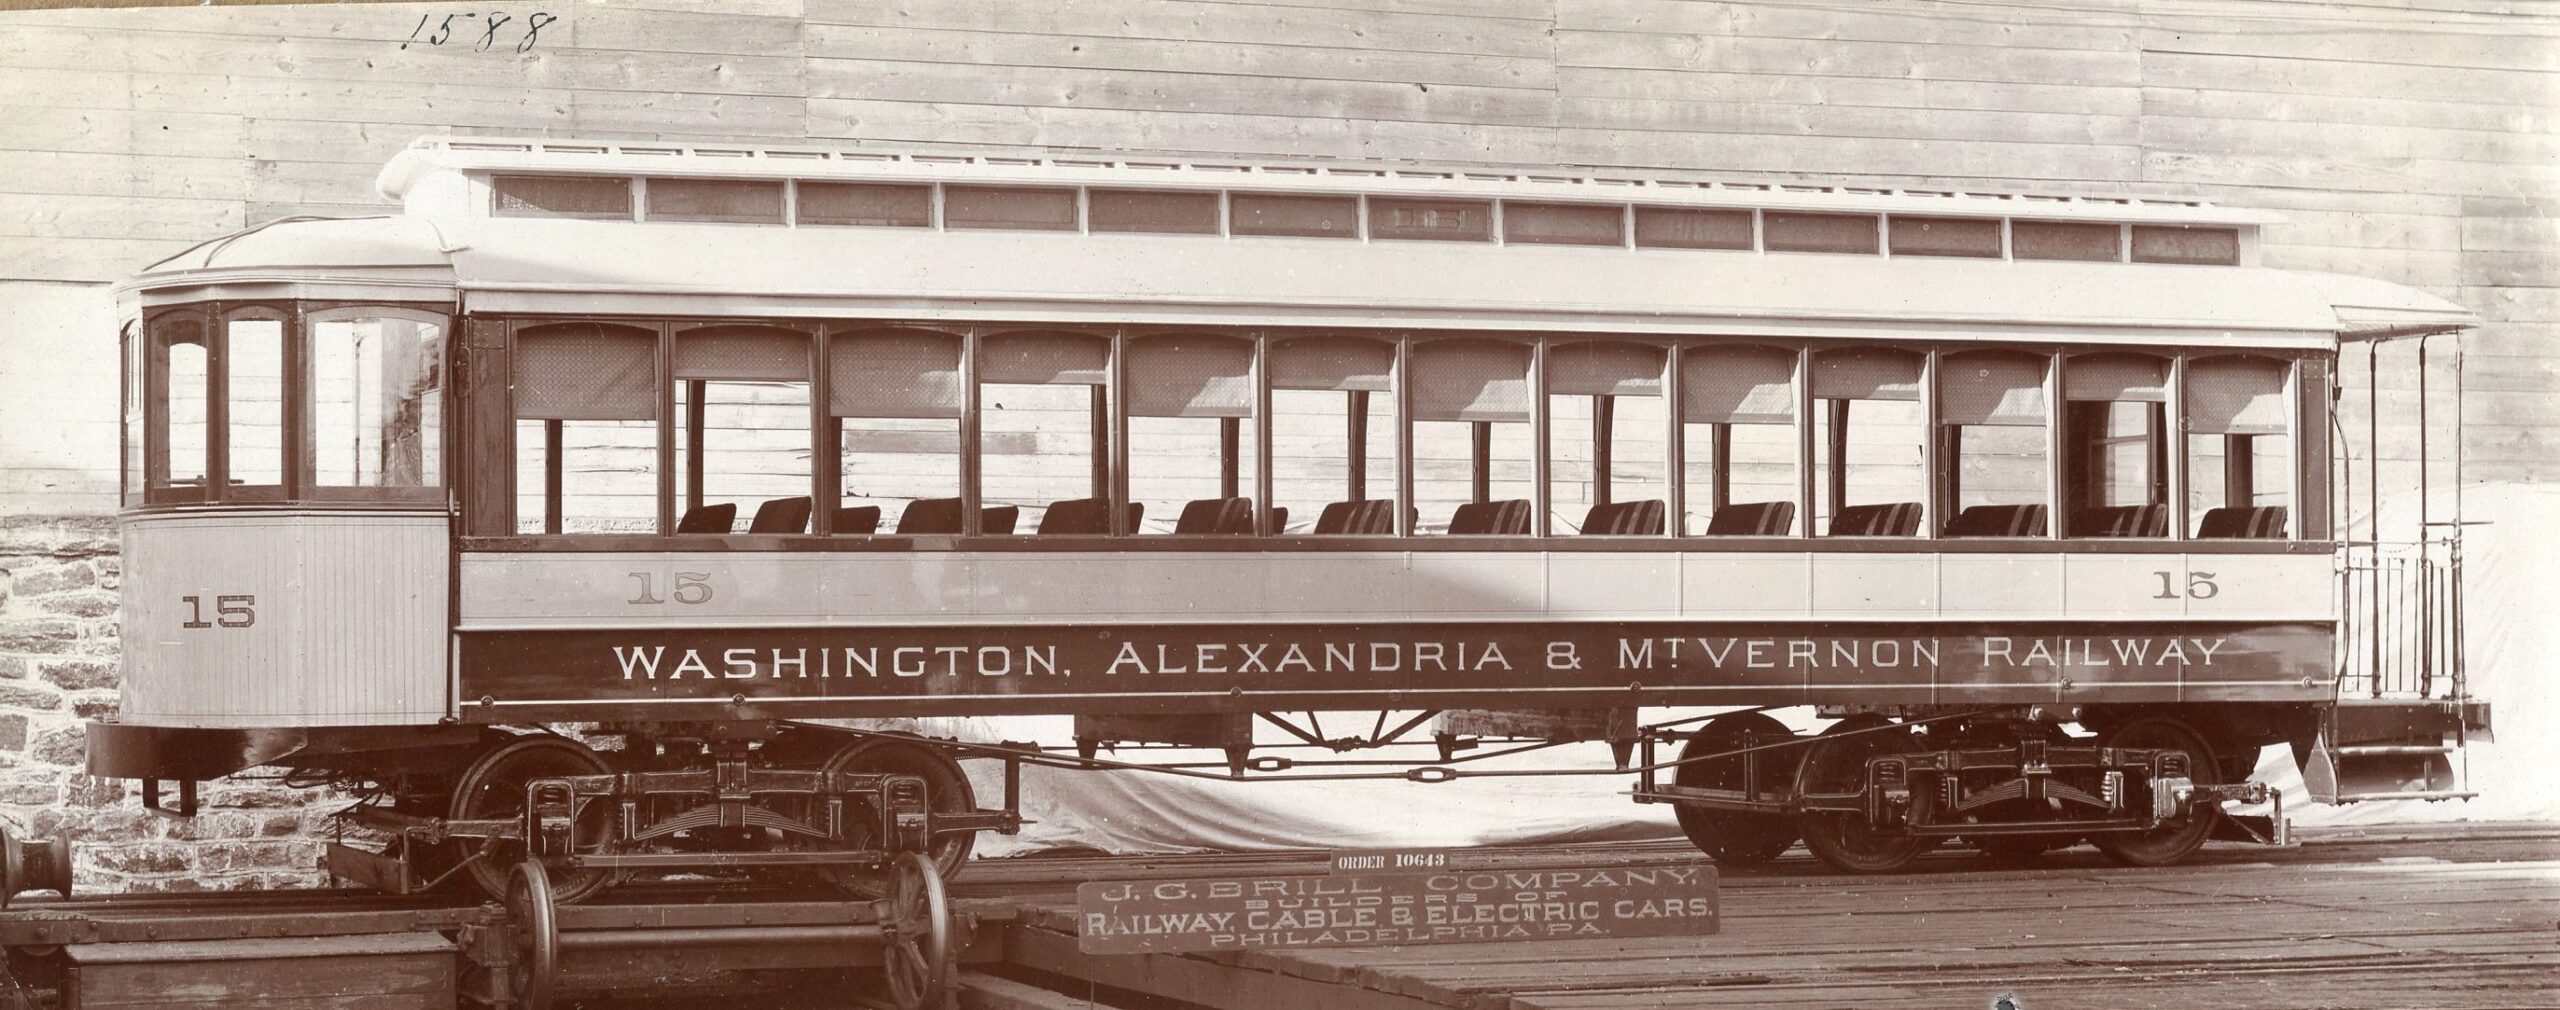 Washington, Alexandria and Mount Vernon Railway | Philadelphia, Pennsylvania | Car #15 | 1900 | J.G. Brill Company Photograph | NJCNRHS Collection